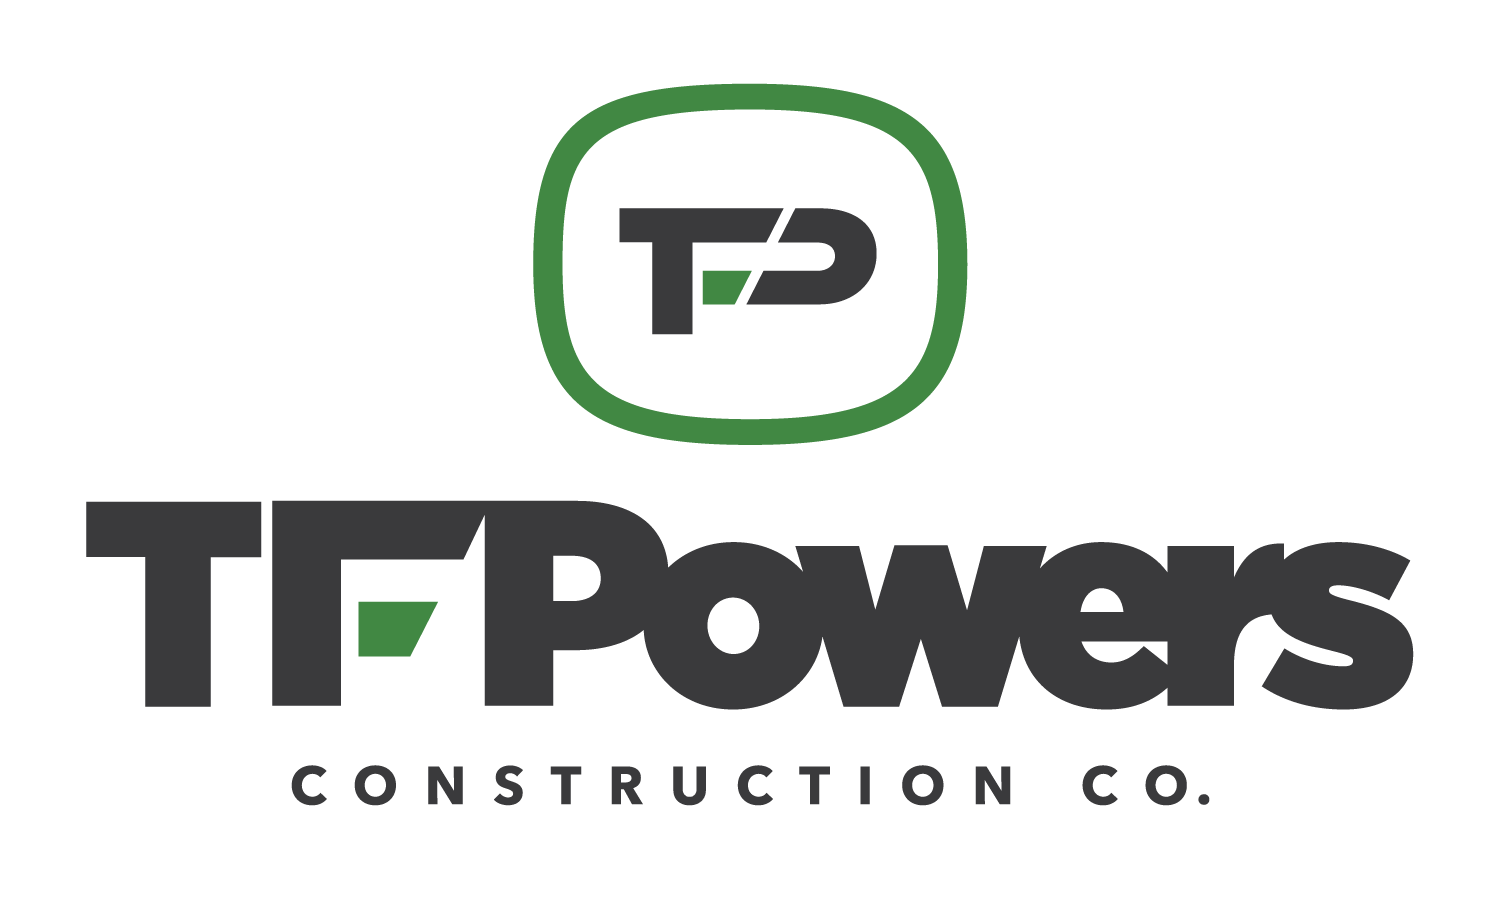 Powers Logo - TF Powers announces new logo design - TF Powers Construction Co.